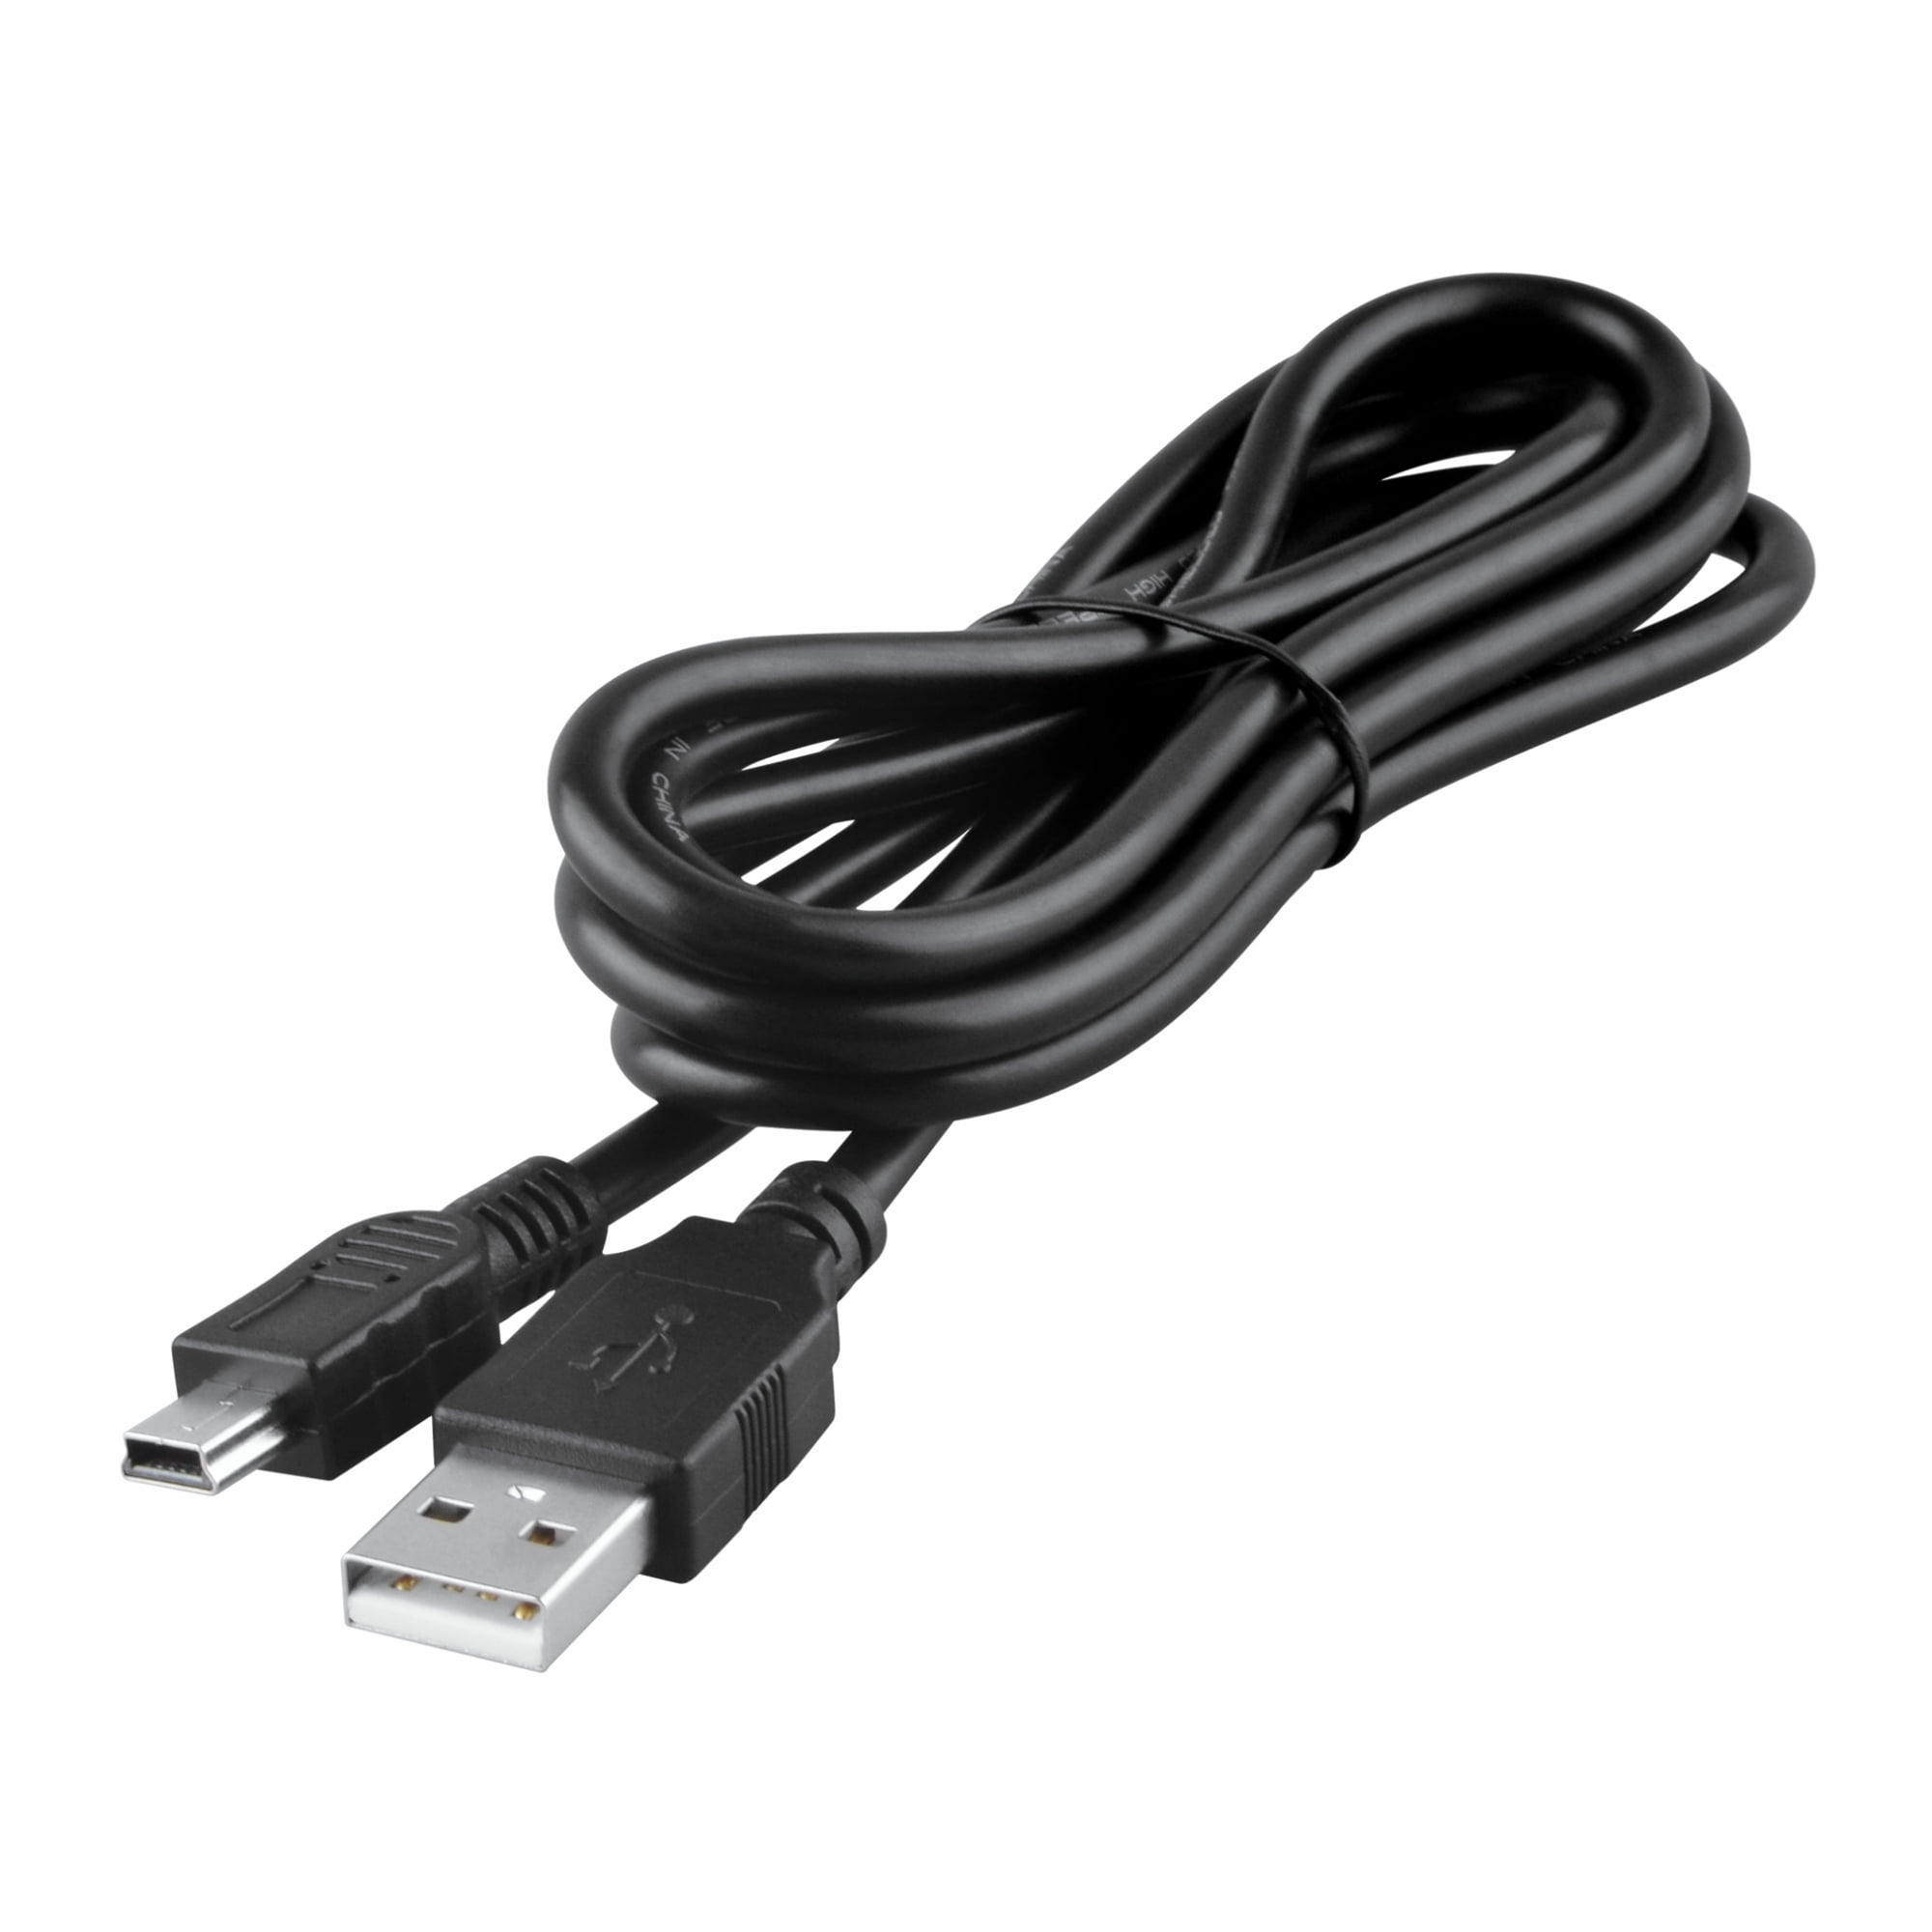 Accessory USA USB Data Cable Cord for Seagate STAC500100 FreeAgent GoFlex 500GB Hard Drive 